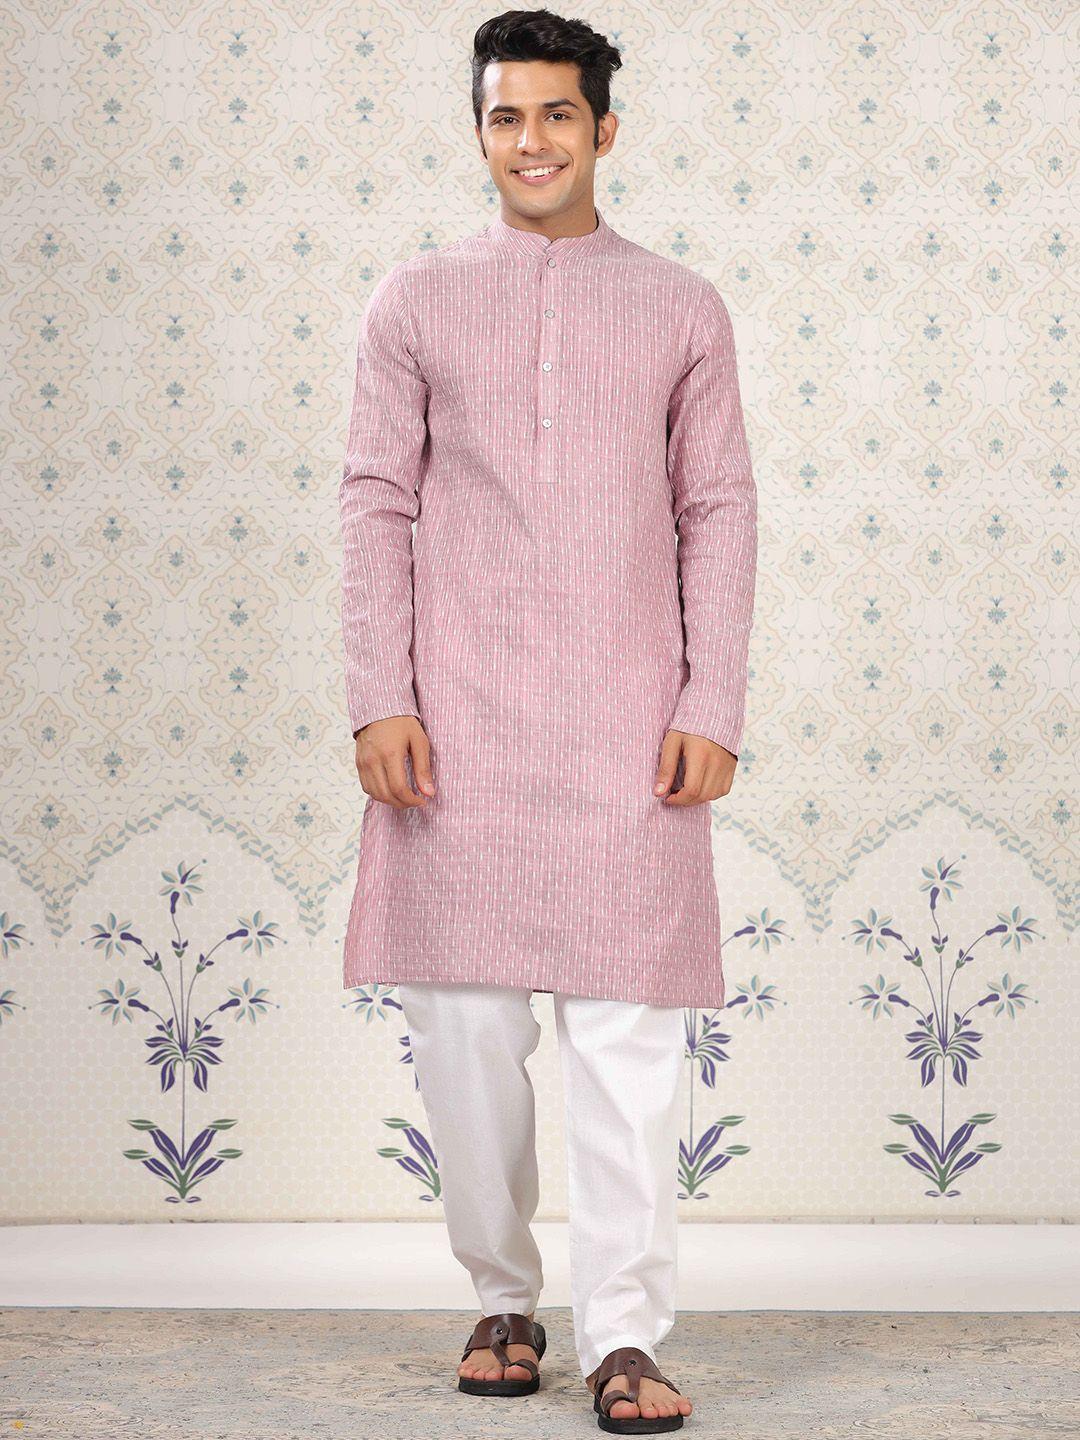 ode by house of pataudi woven design pure cotton kurta with pyjamas